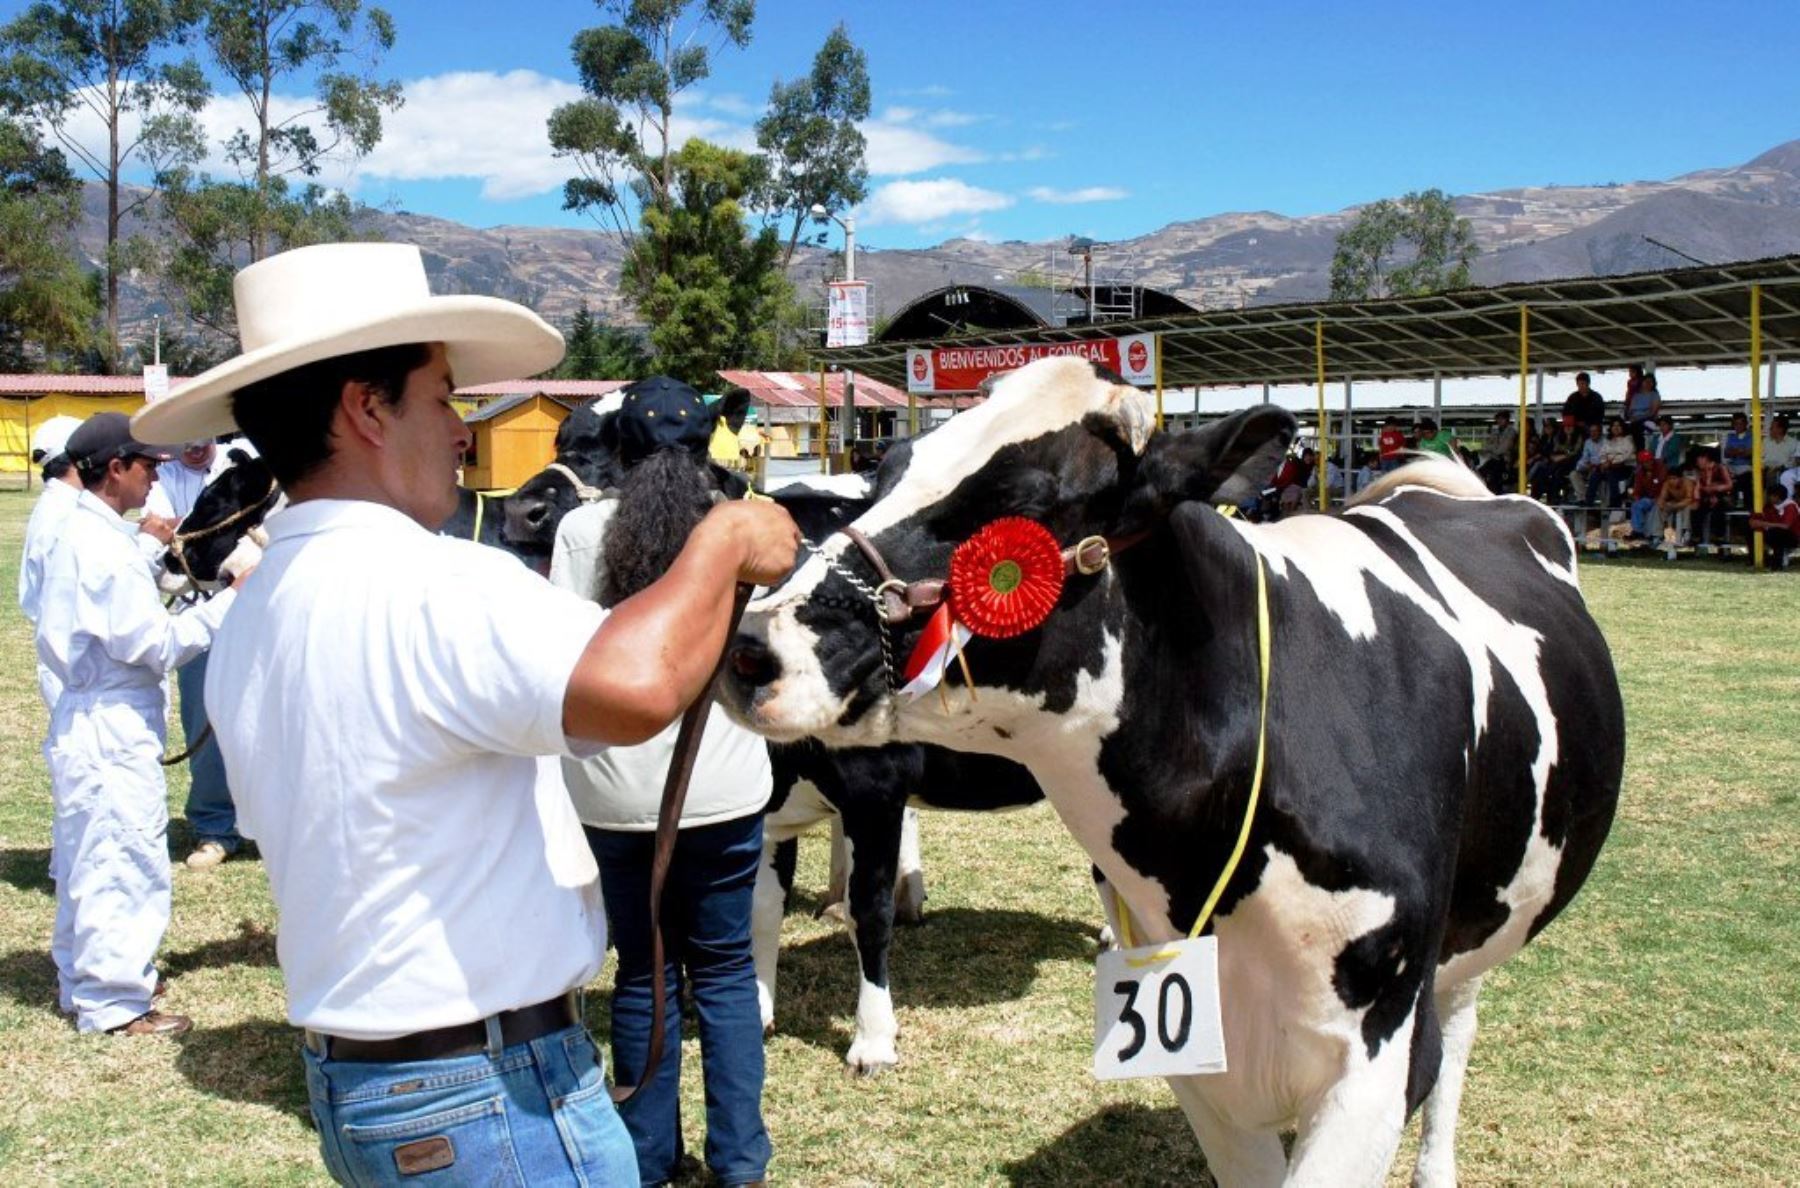 Peru Lambayeque expects to 50,000 visitors at livestock fair